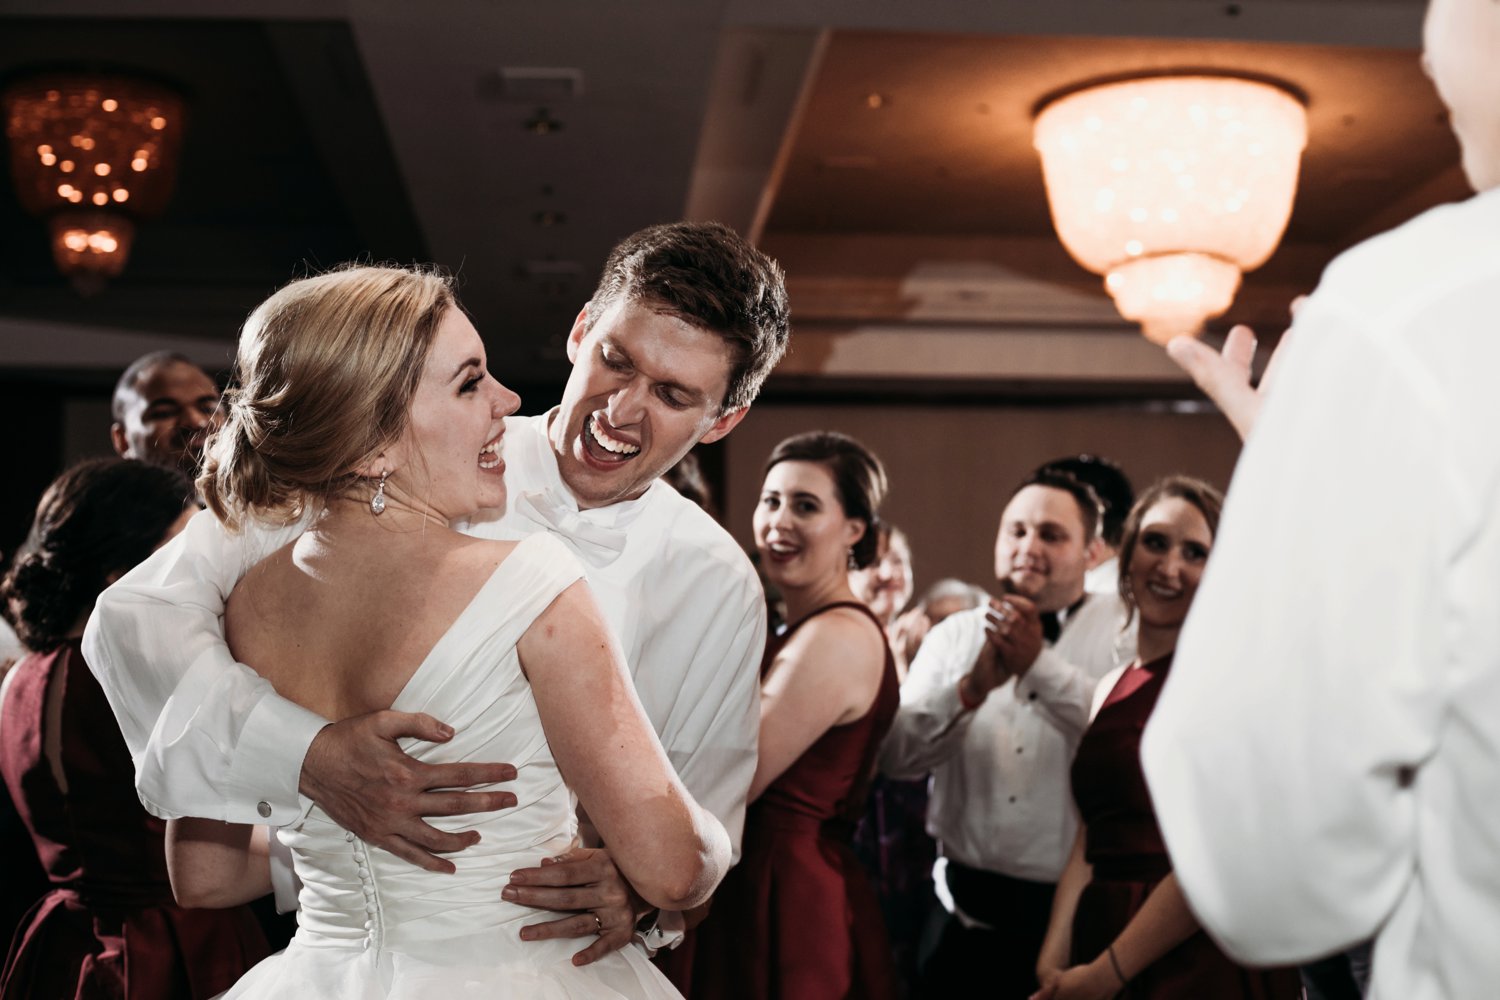   images by feliciathephotographer.com | destination wedding photographer | kansas city | summertime | classic | dance floor | party | dj lights | laughter | singing | bride and groom | romantic | true love |